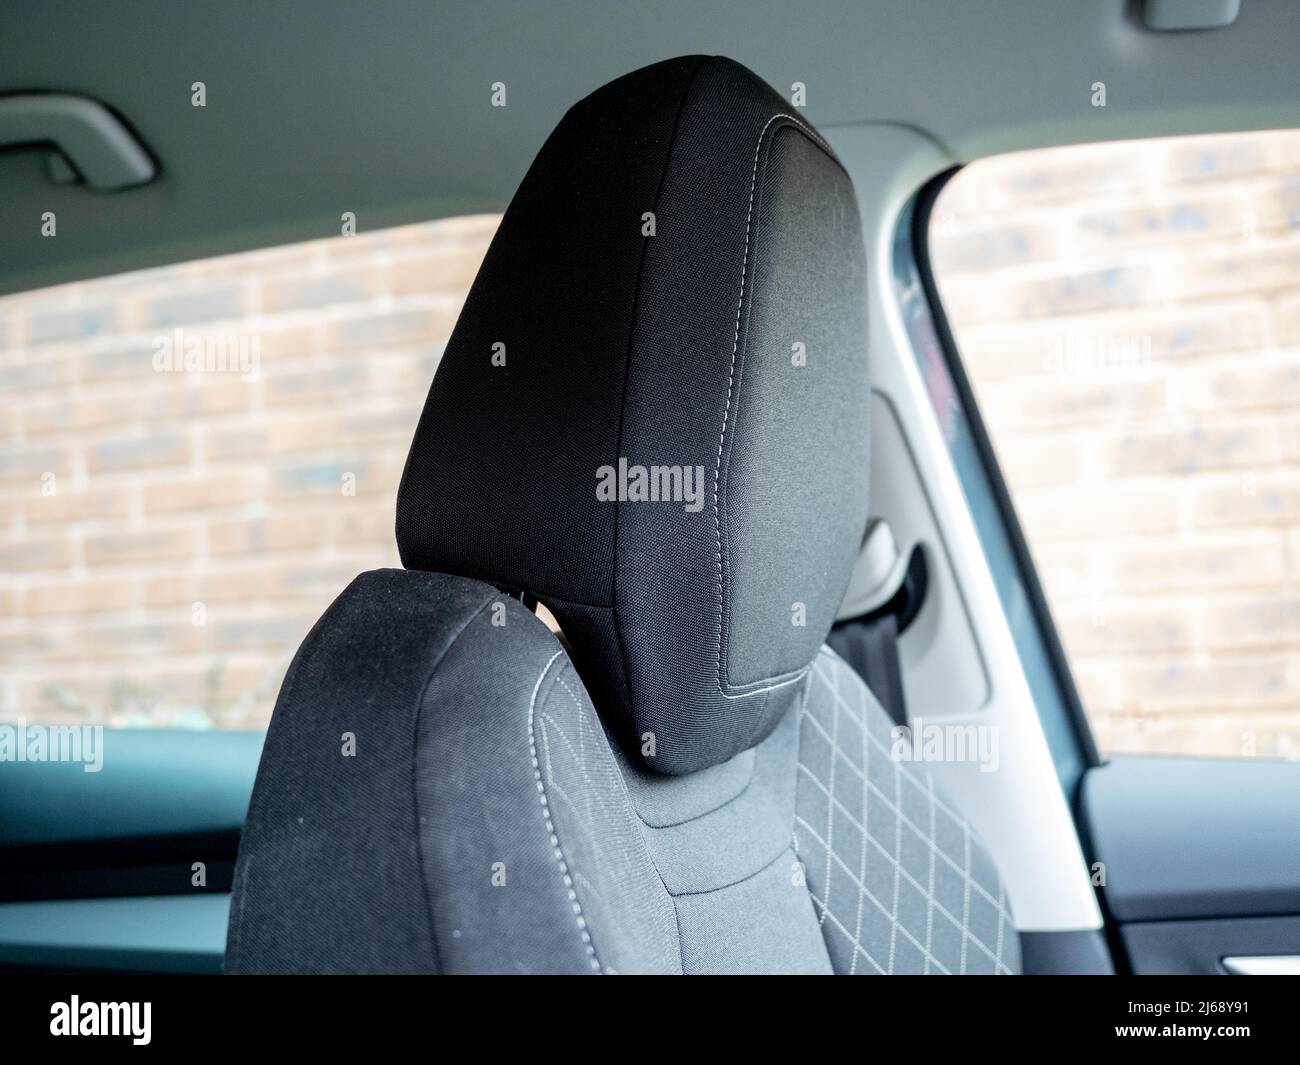 black fabric stitched cloth car headrest in upmarket sports utility vehicle Stock Photo